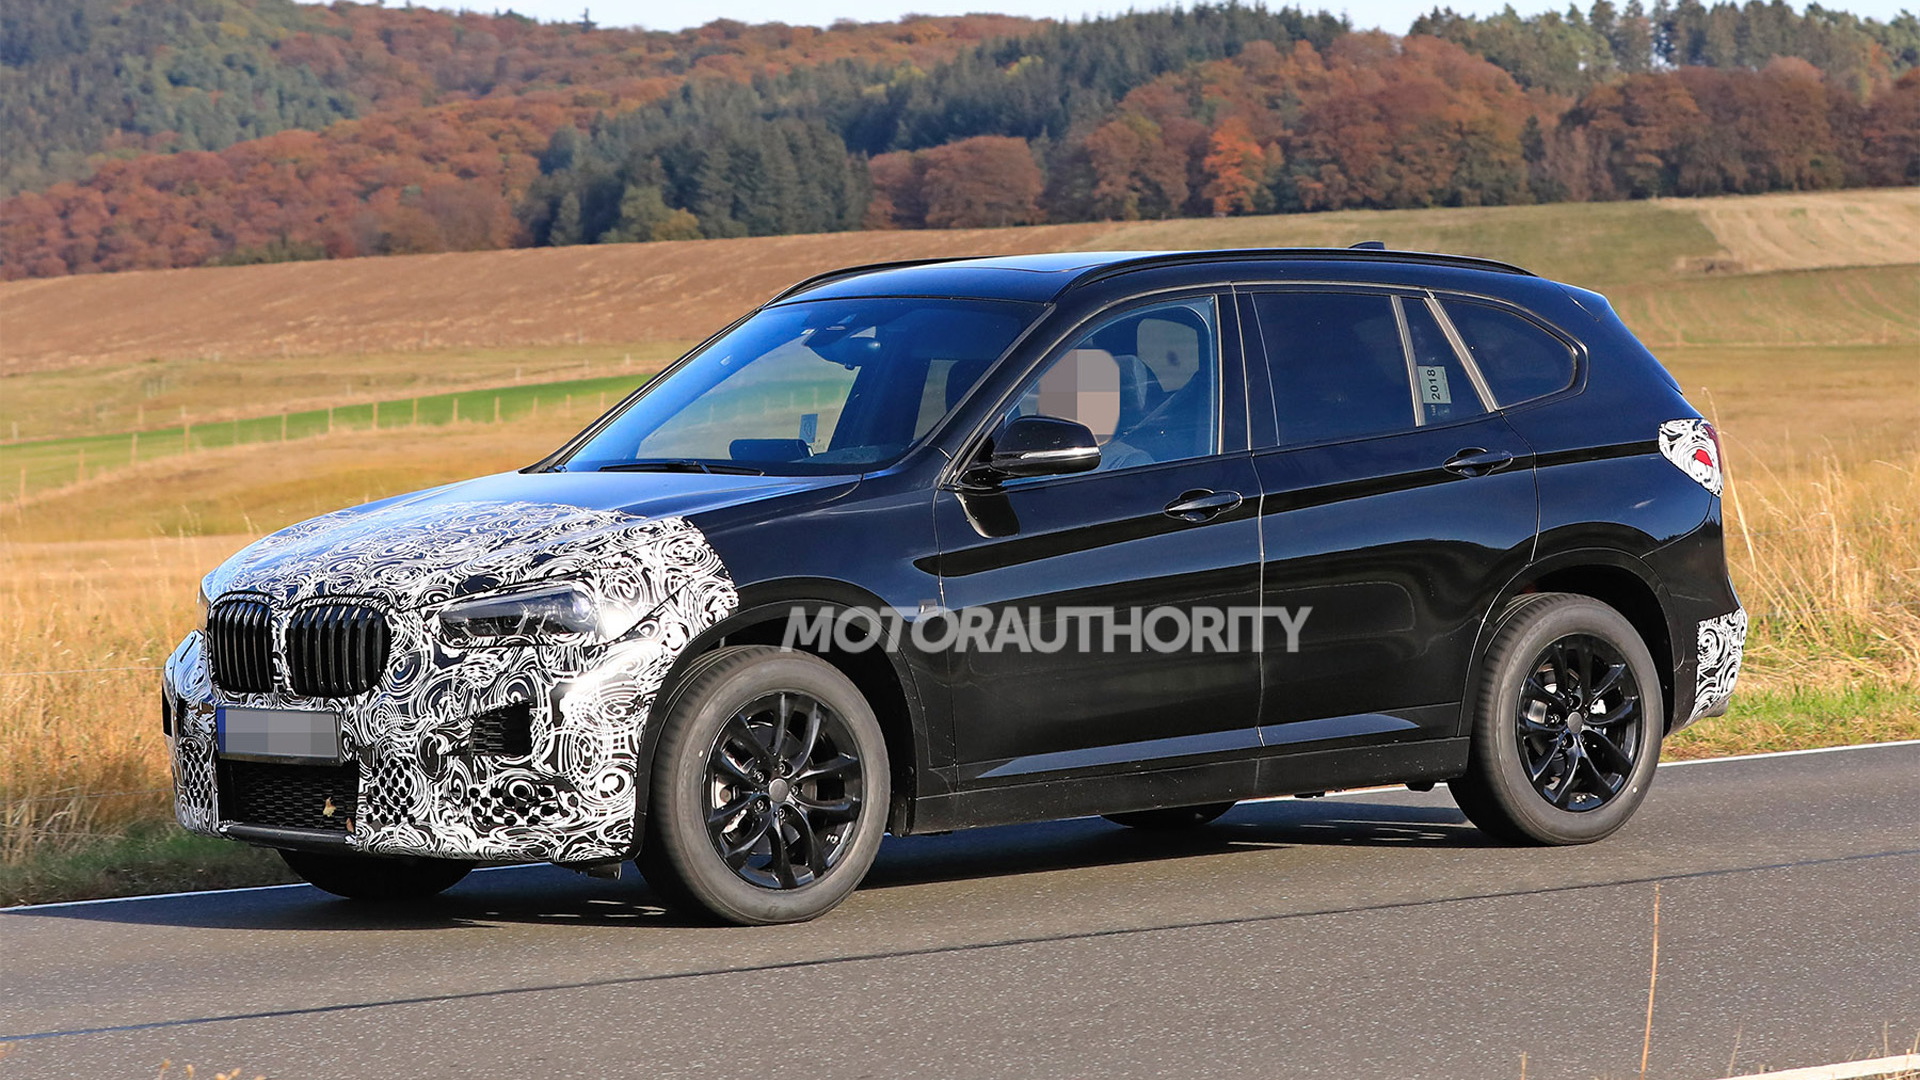 2020 BMW X1 facelift spy shots - Image via S. Baldauf/SB-Medien